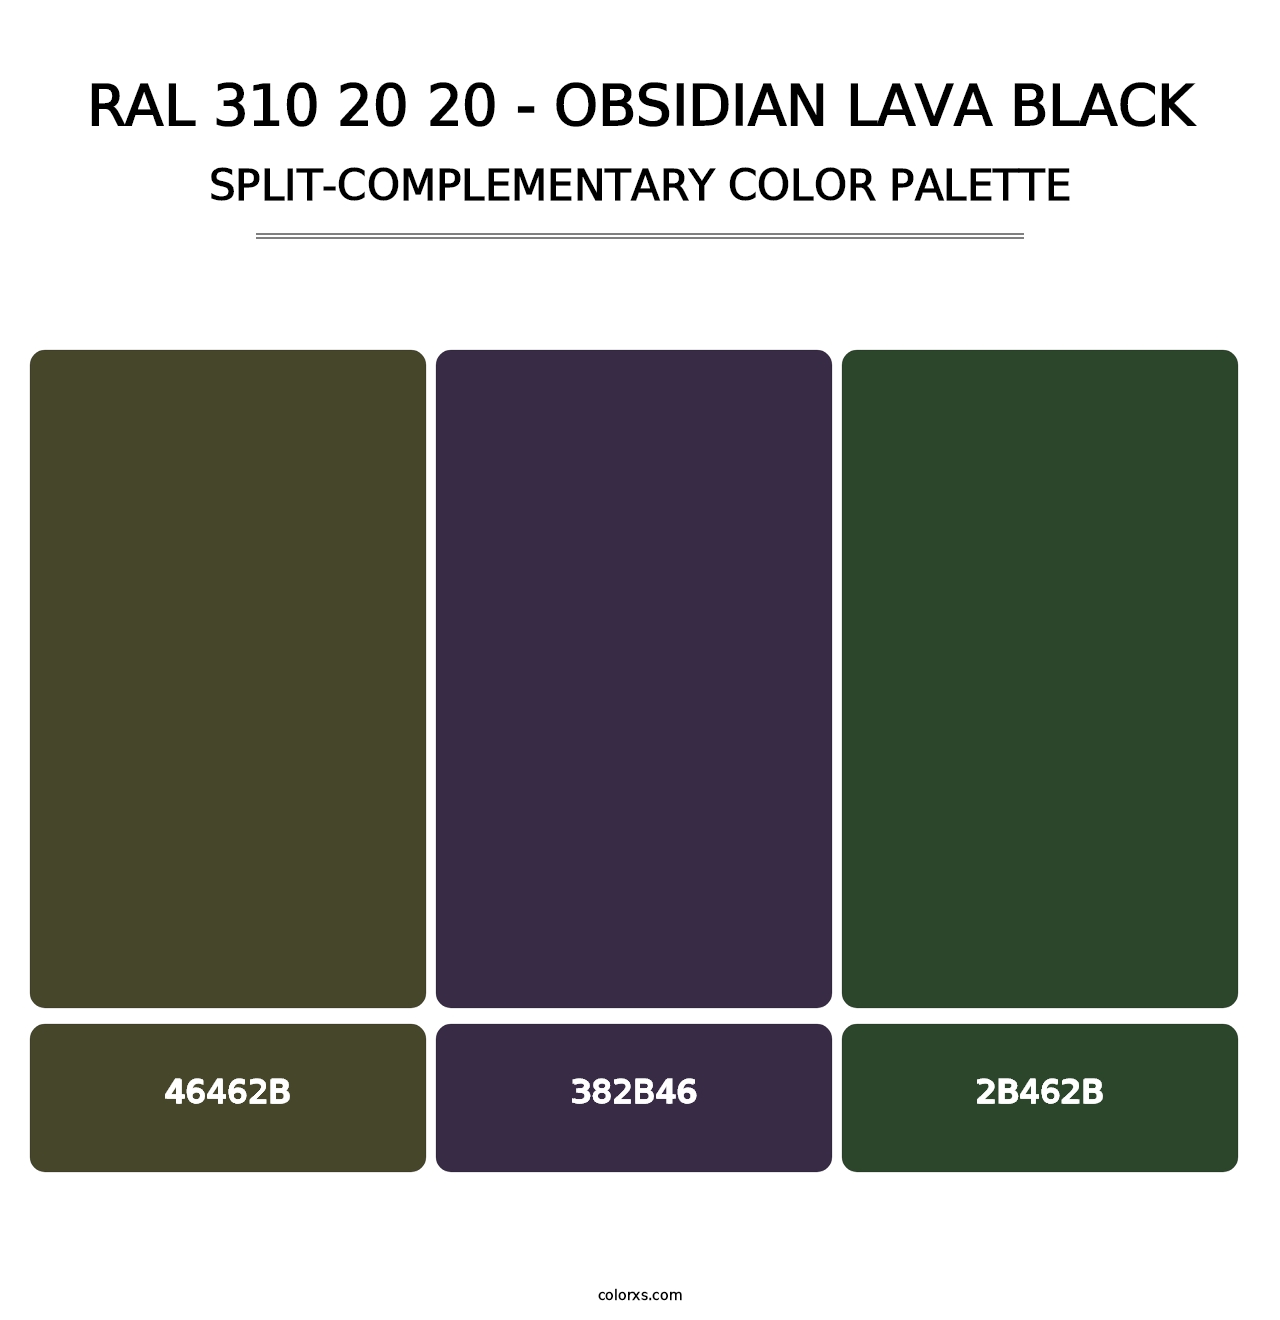 RAL 310 20 20 - Obsidian Lava Black - Split-Complementary Color Palette